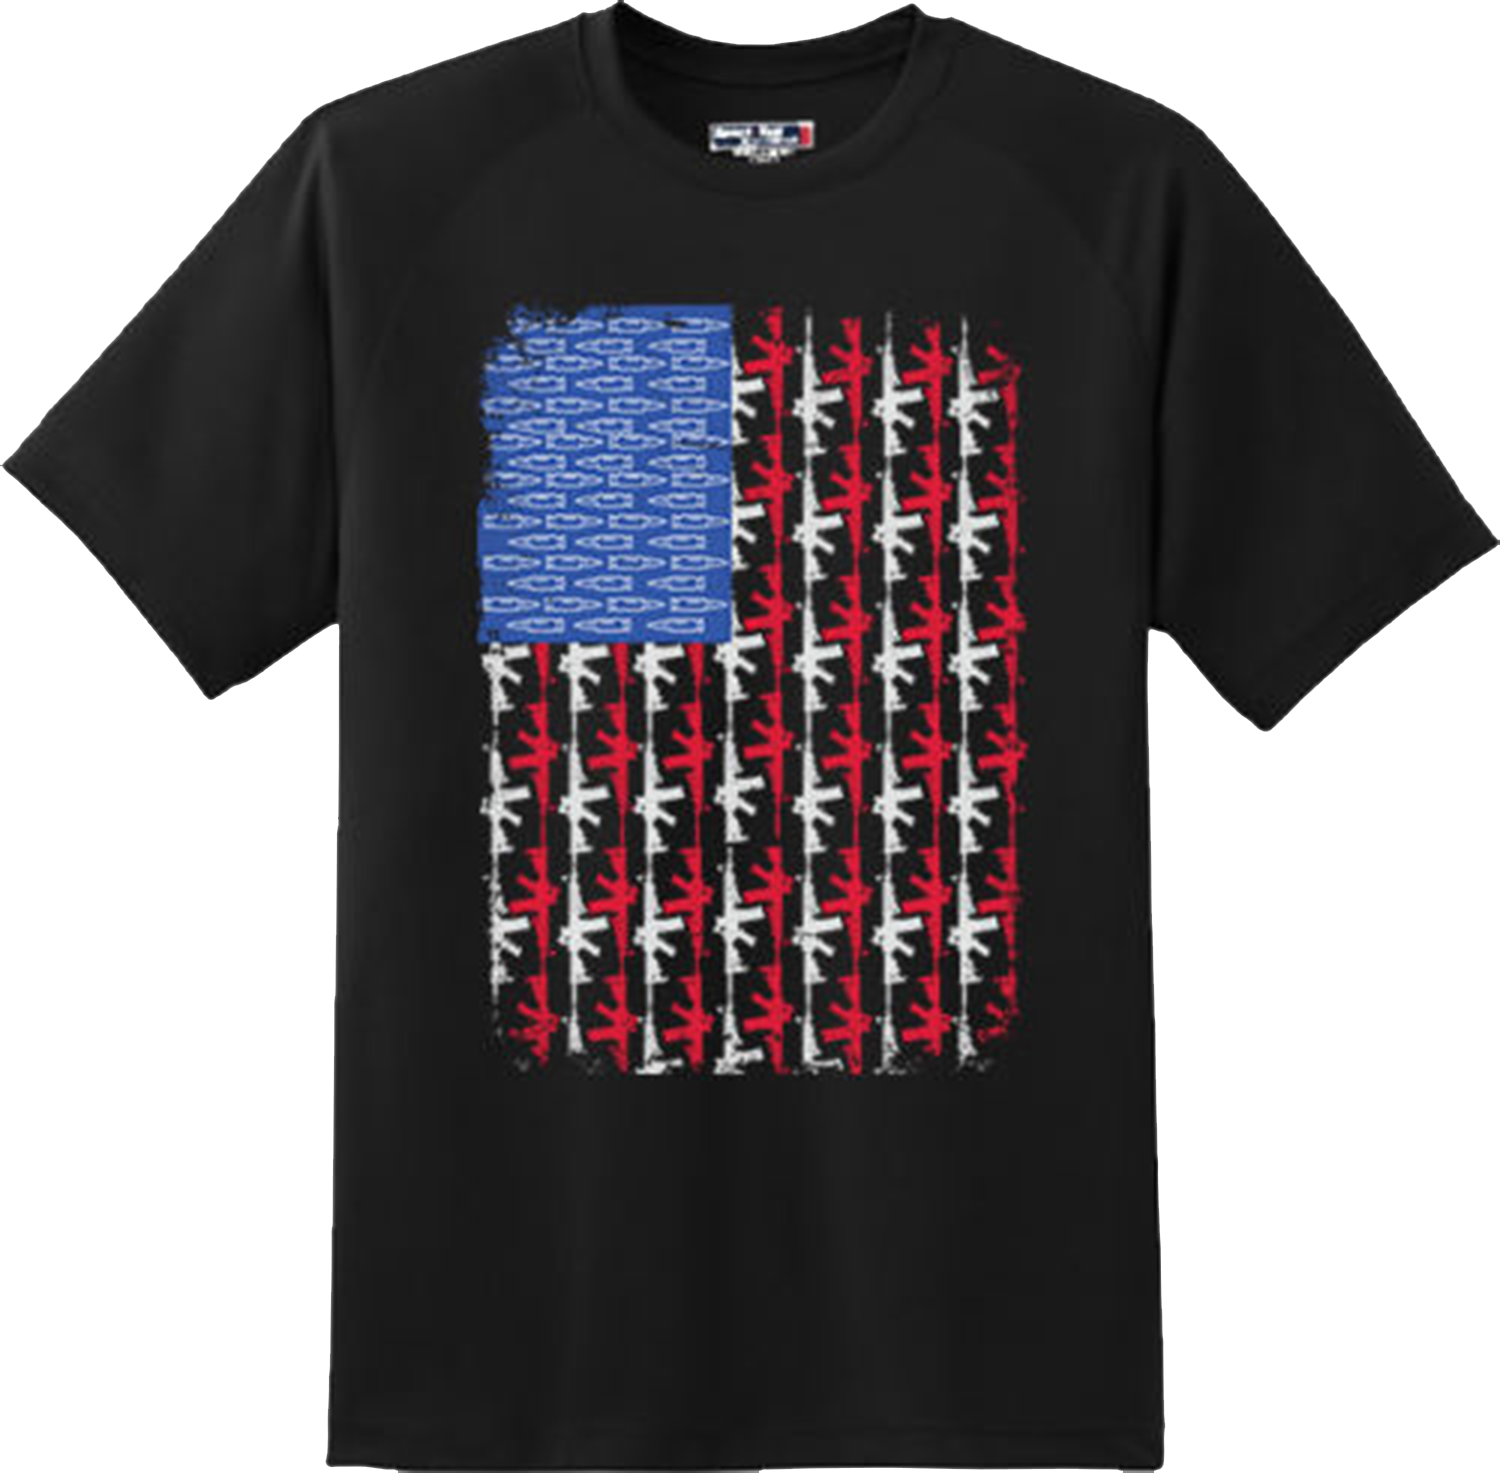 Gun US Flag America 2nd Amendment Gun Freedom Liberty T Shirt New Graphic Tee